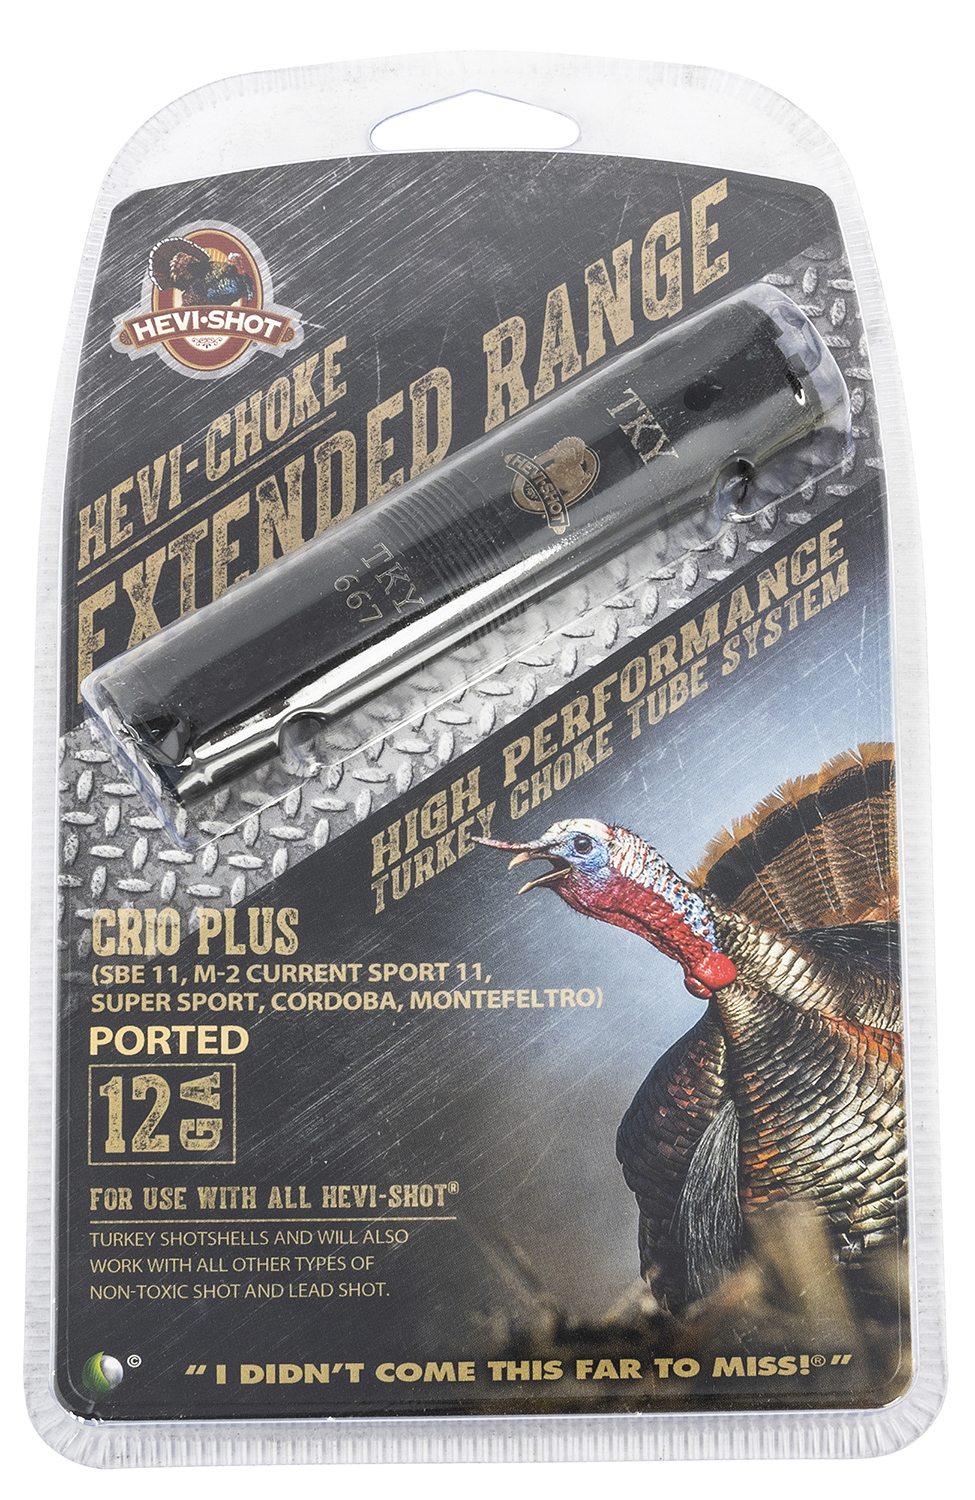 HEVI-Shot 450123 Hevi-Choke Turkey Benelli Crio Plus 12 Gauge Extended Range 17-4 Stainless Steel Black (Ported)